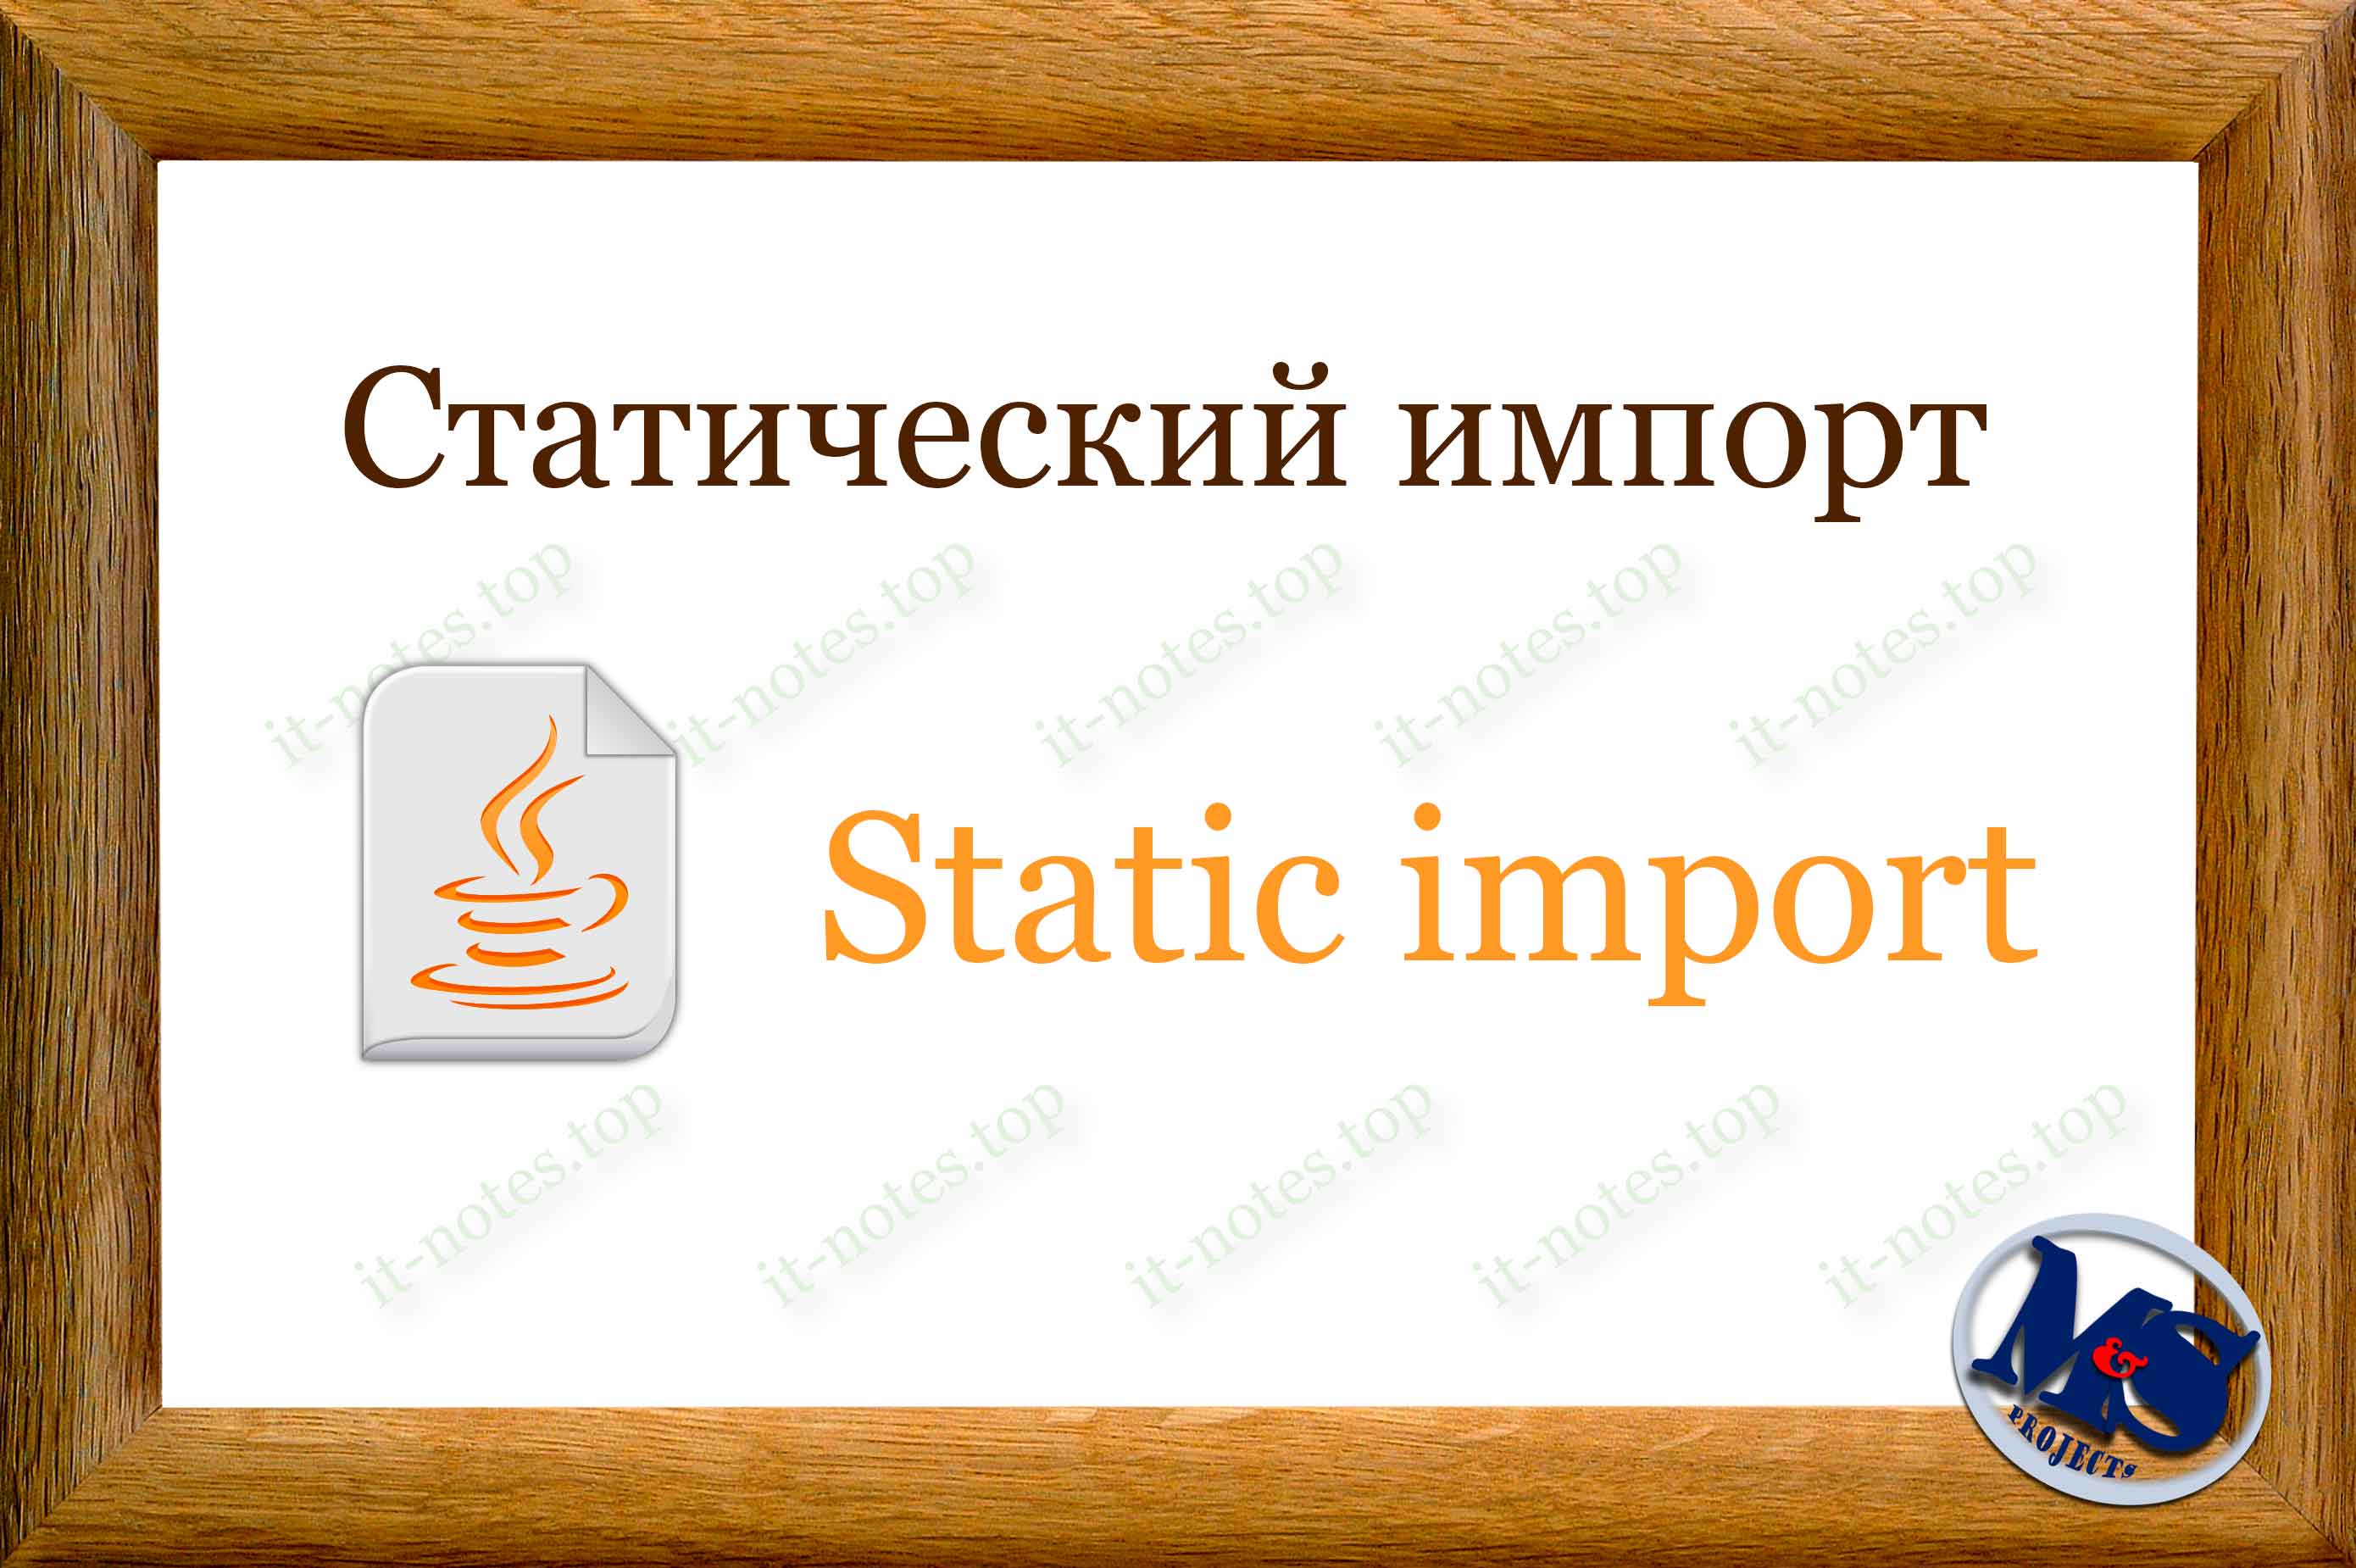 Статический импорт